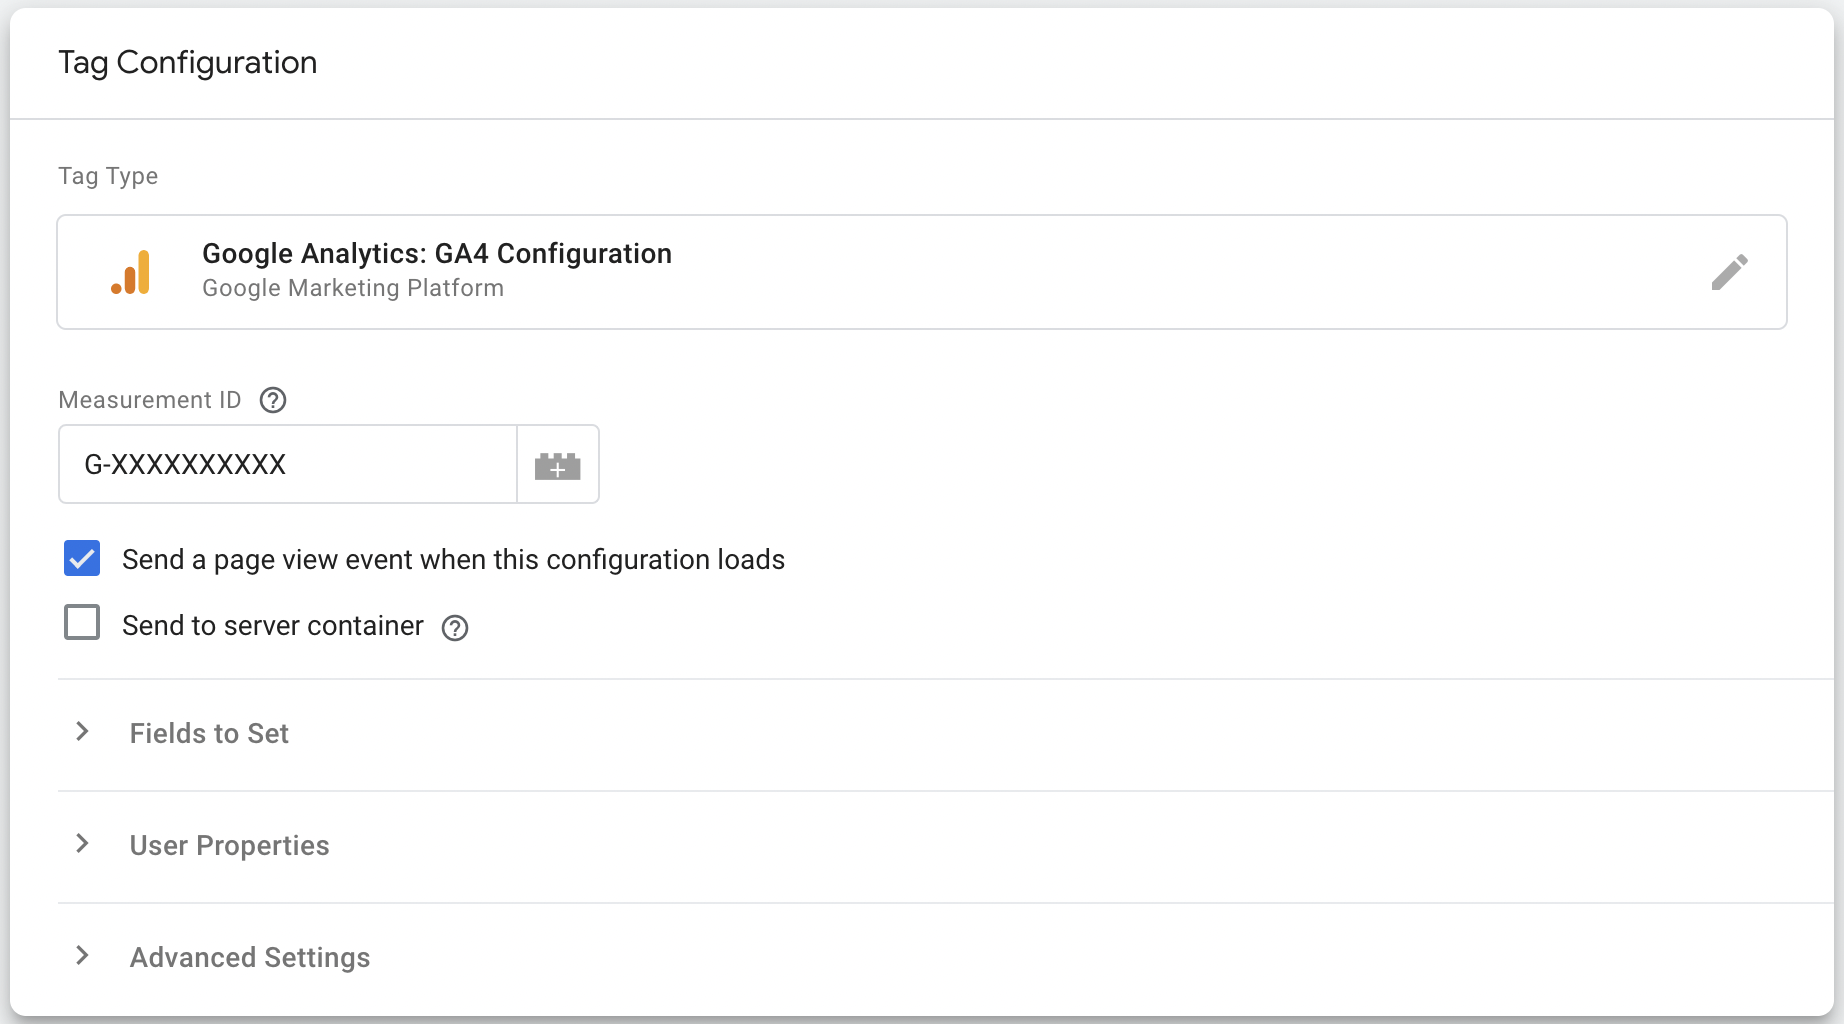 Google Analytics GA4 Configuration measurement ID